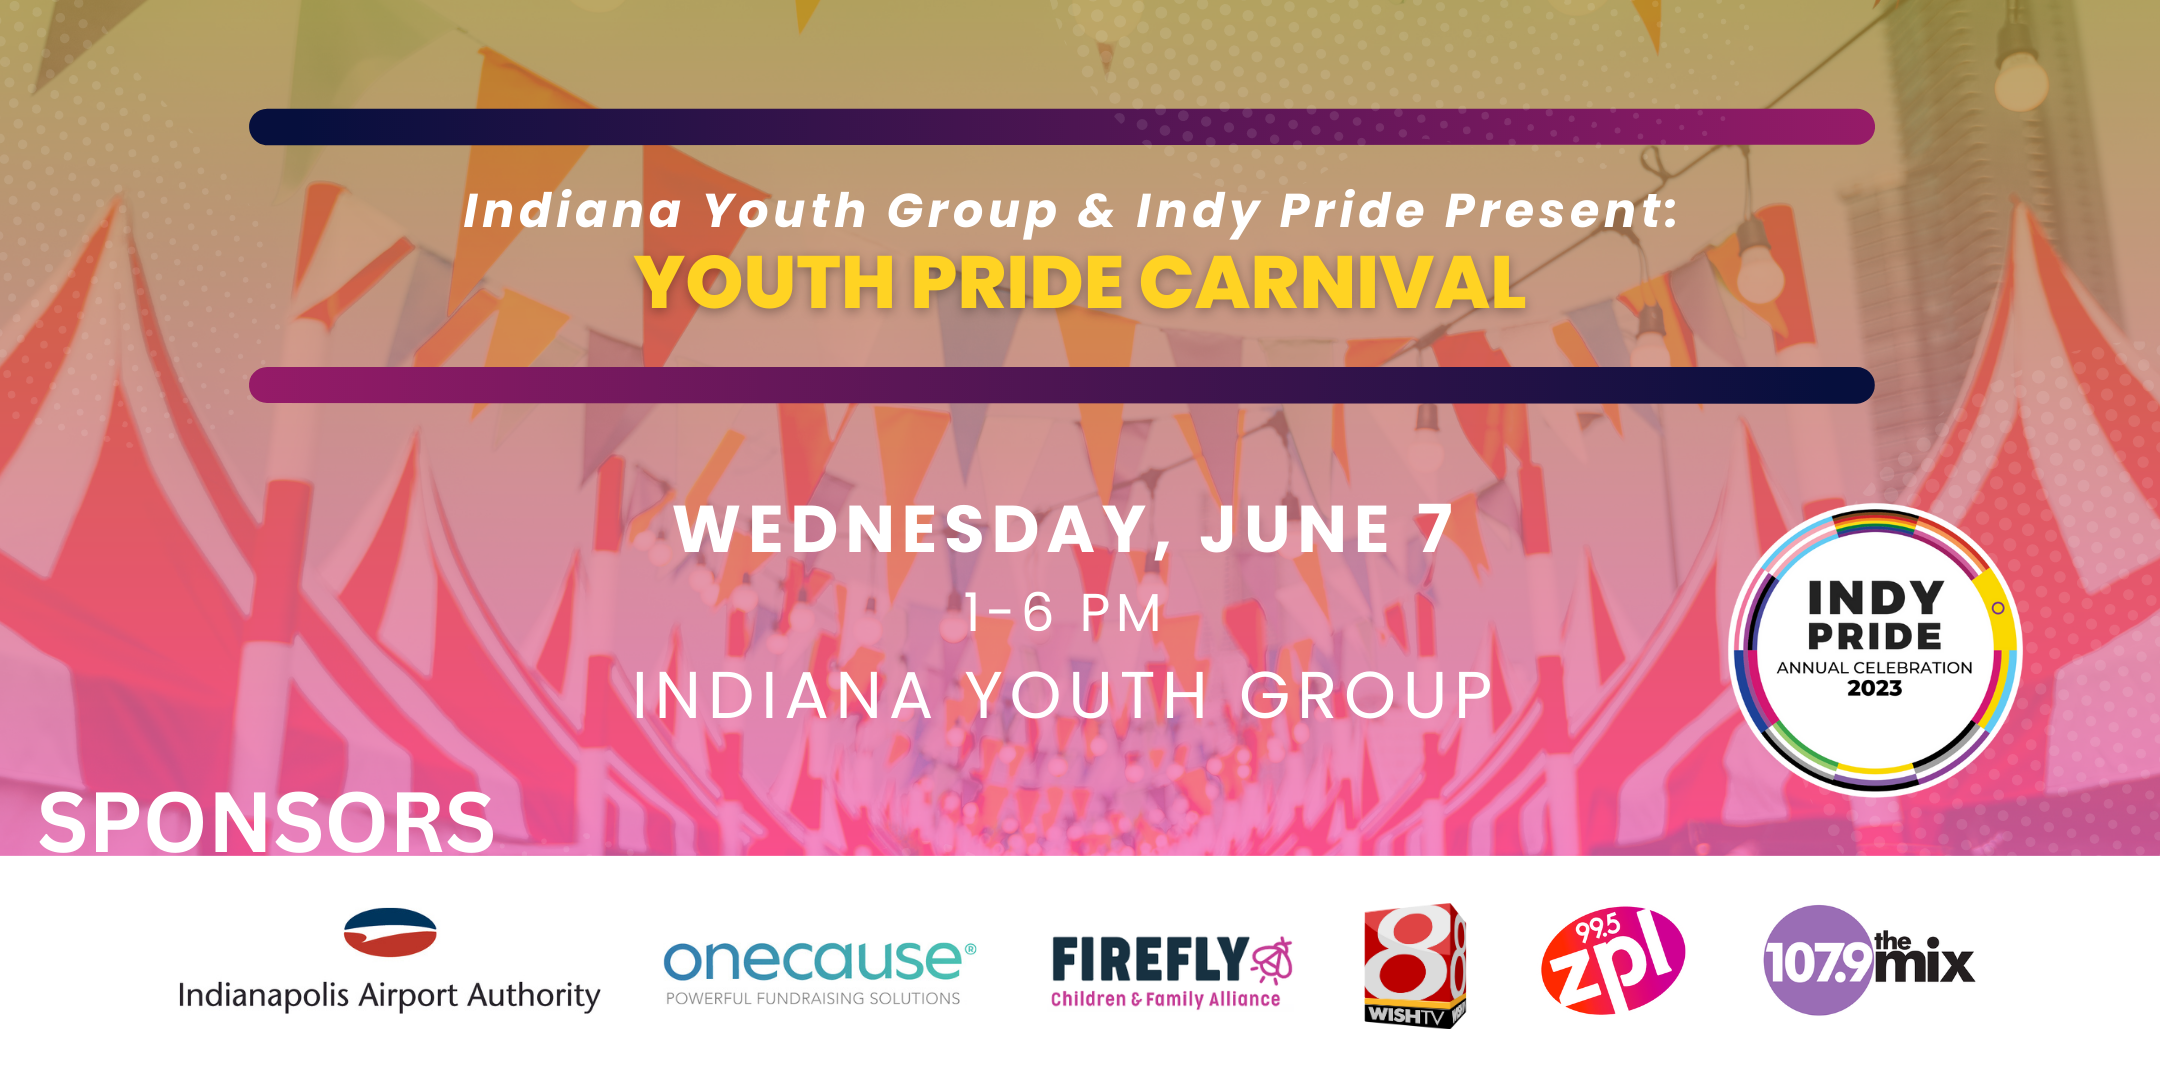 IYG & Indy Pride present: Youth Pride Carnival